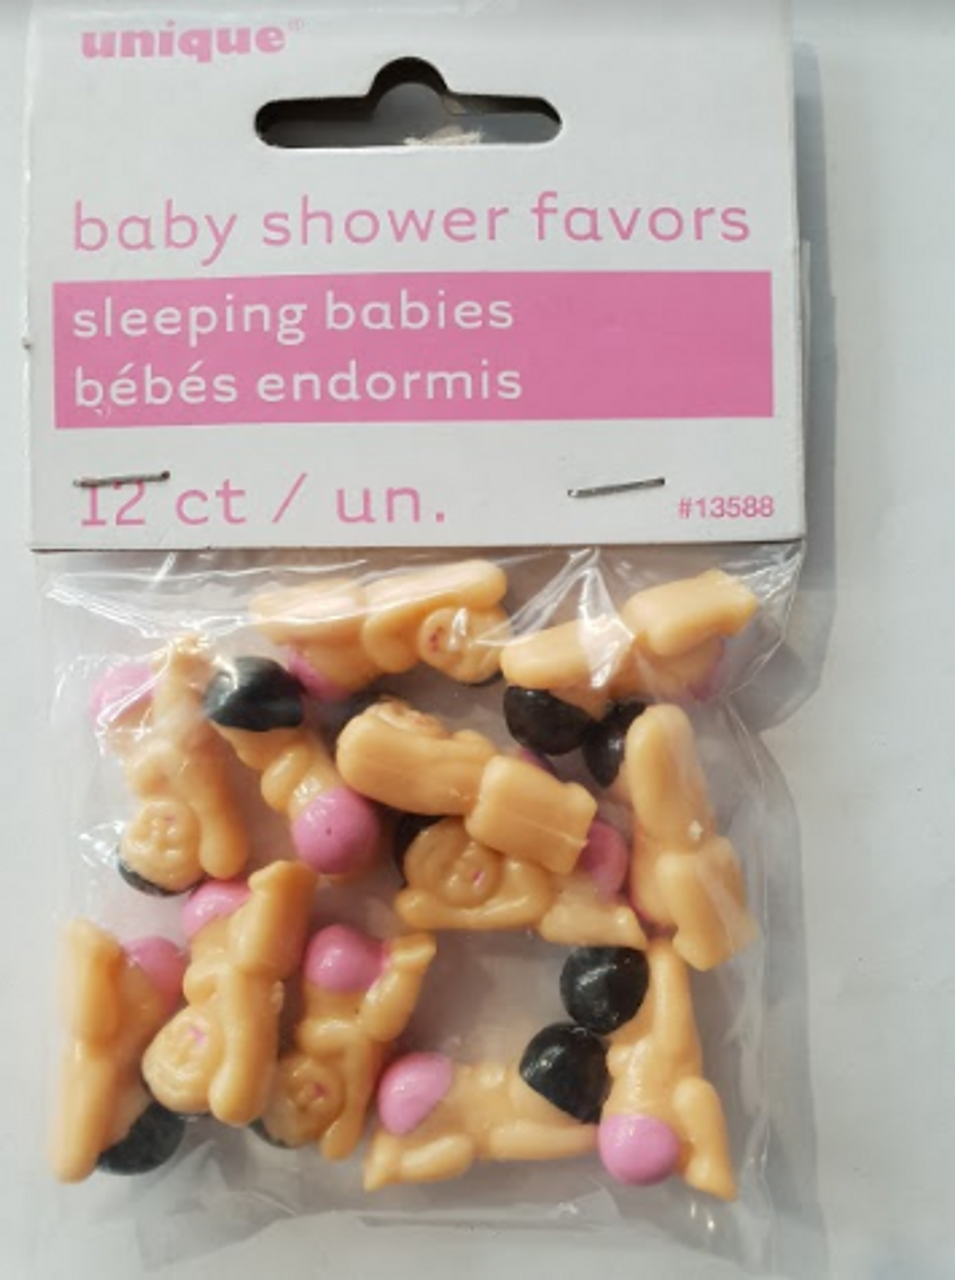 Baby shower sleeping babies